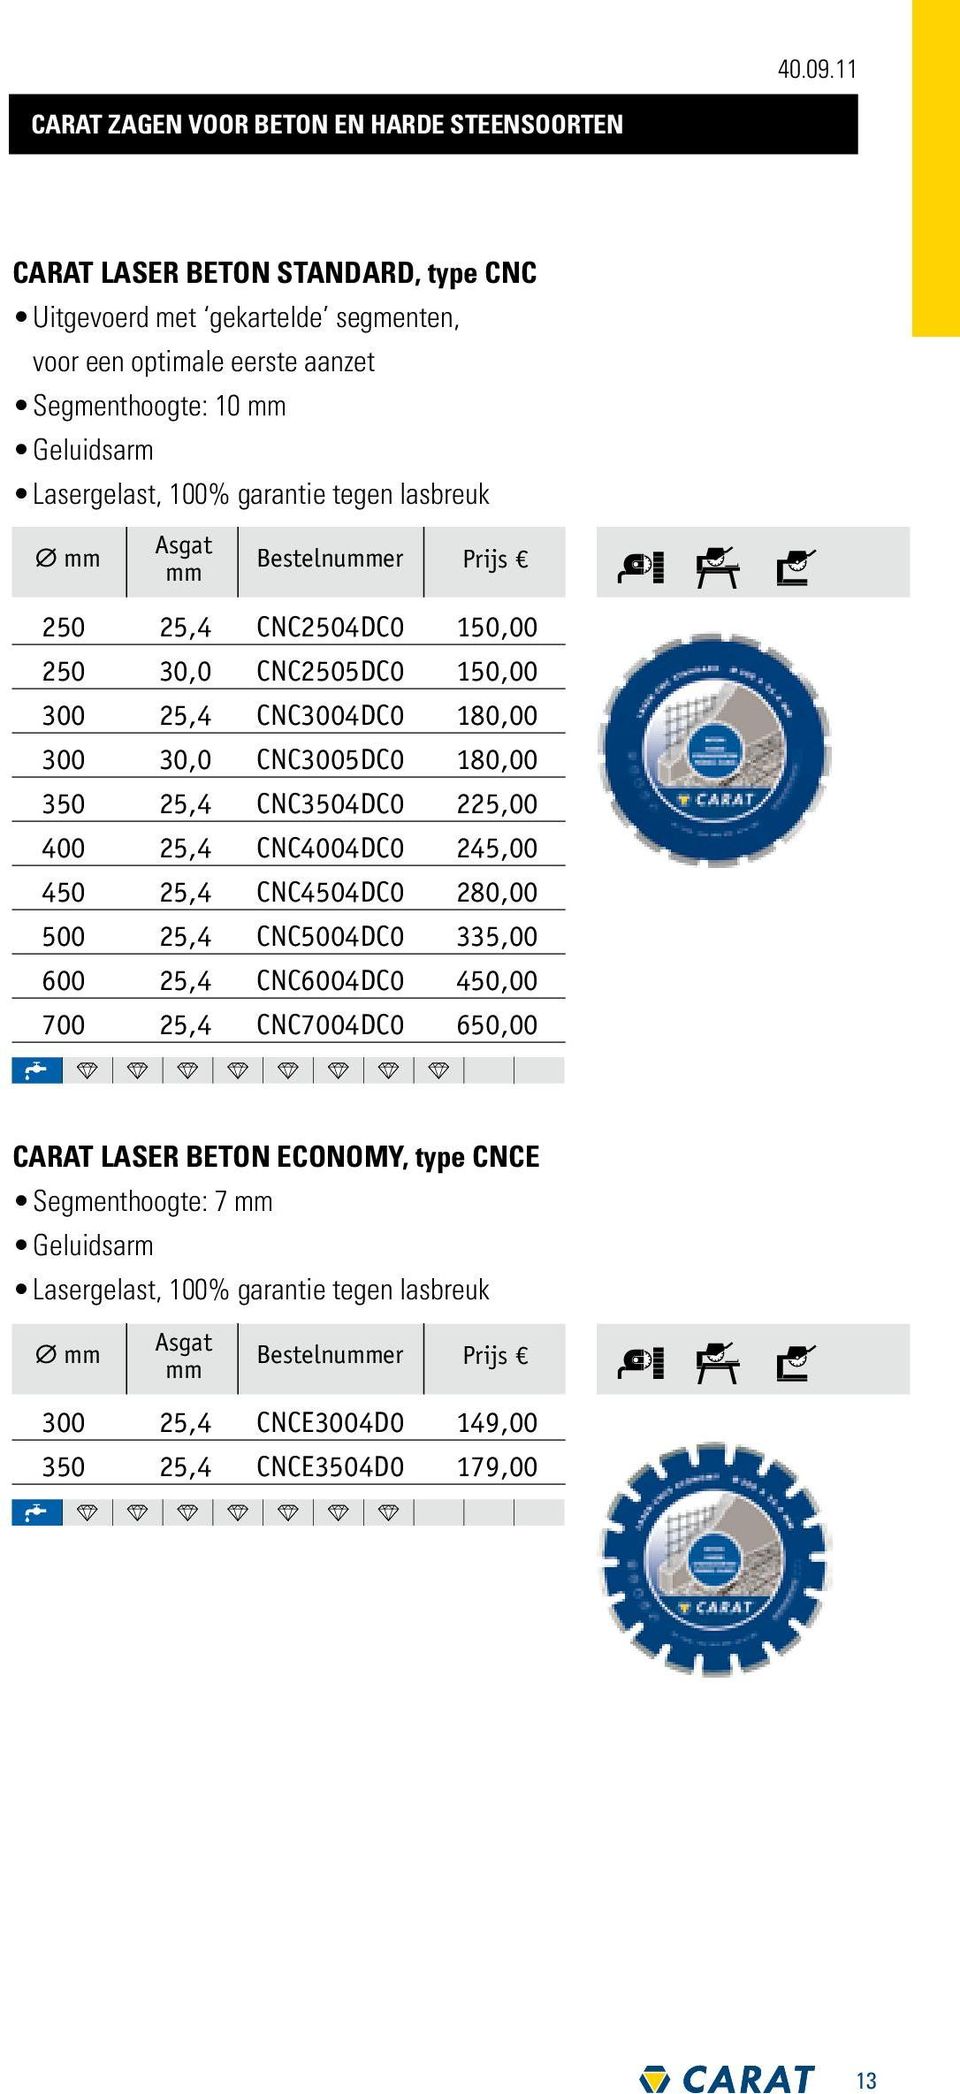 Geluidsarm Lasergelast, 100% garantie tegen lasbreuk Ø mm Asgat Bestelnummer Prijs mm 250 25,4 CNC2504DC0 150,00 250 30,0 CNC2505DC0 150,00 300 25,4 CNC3004DC0 180,00 300 30,0